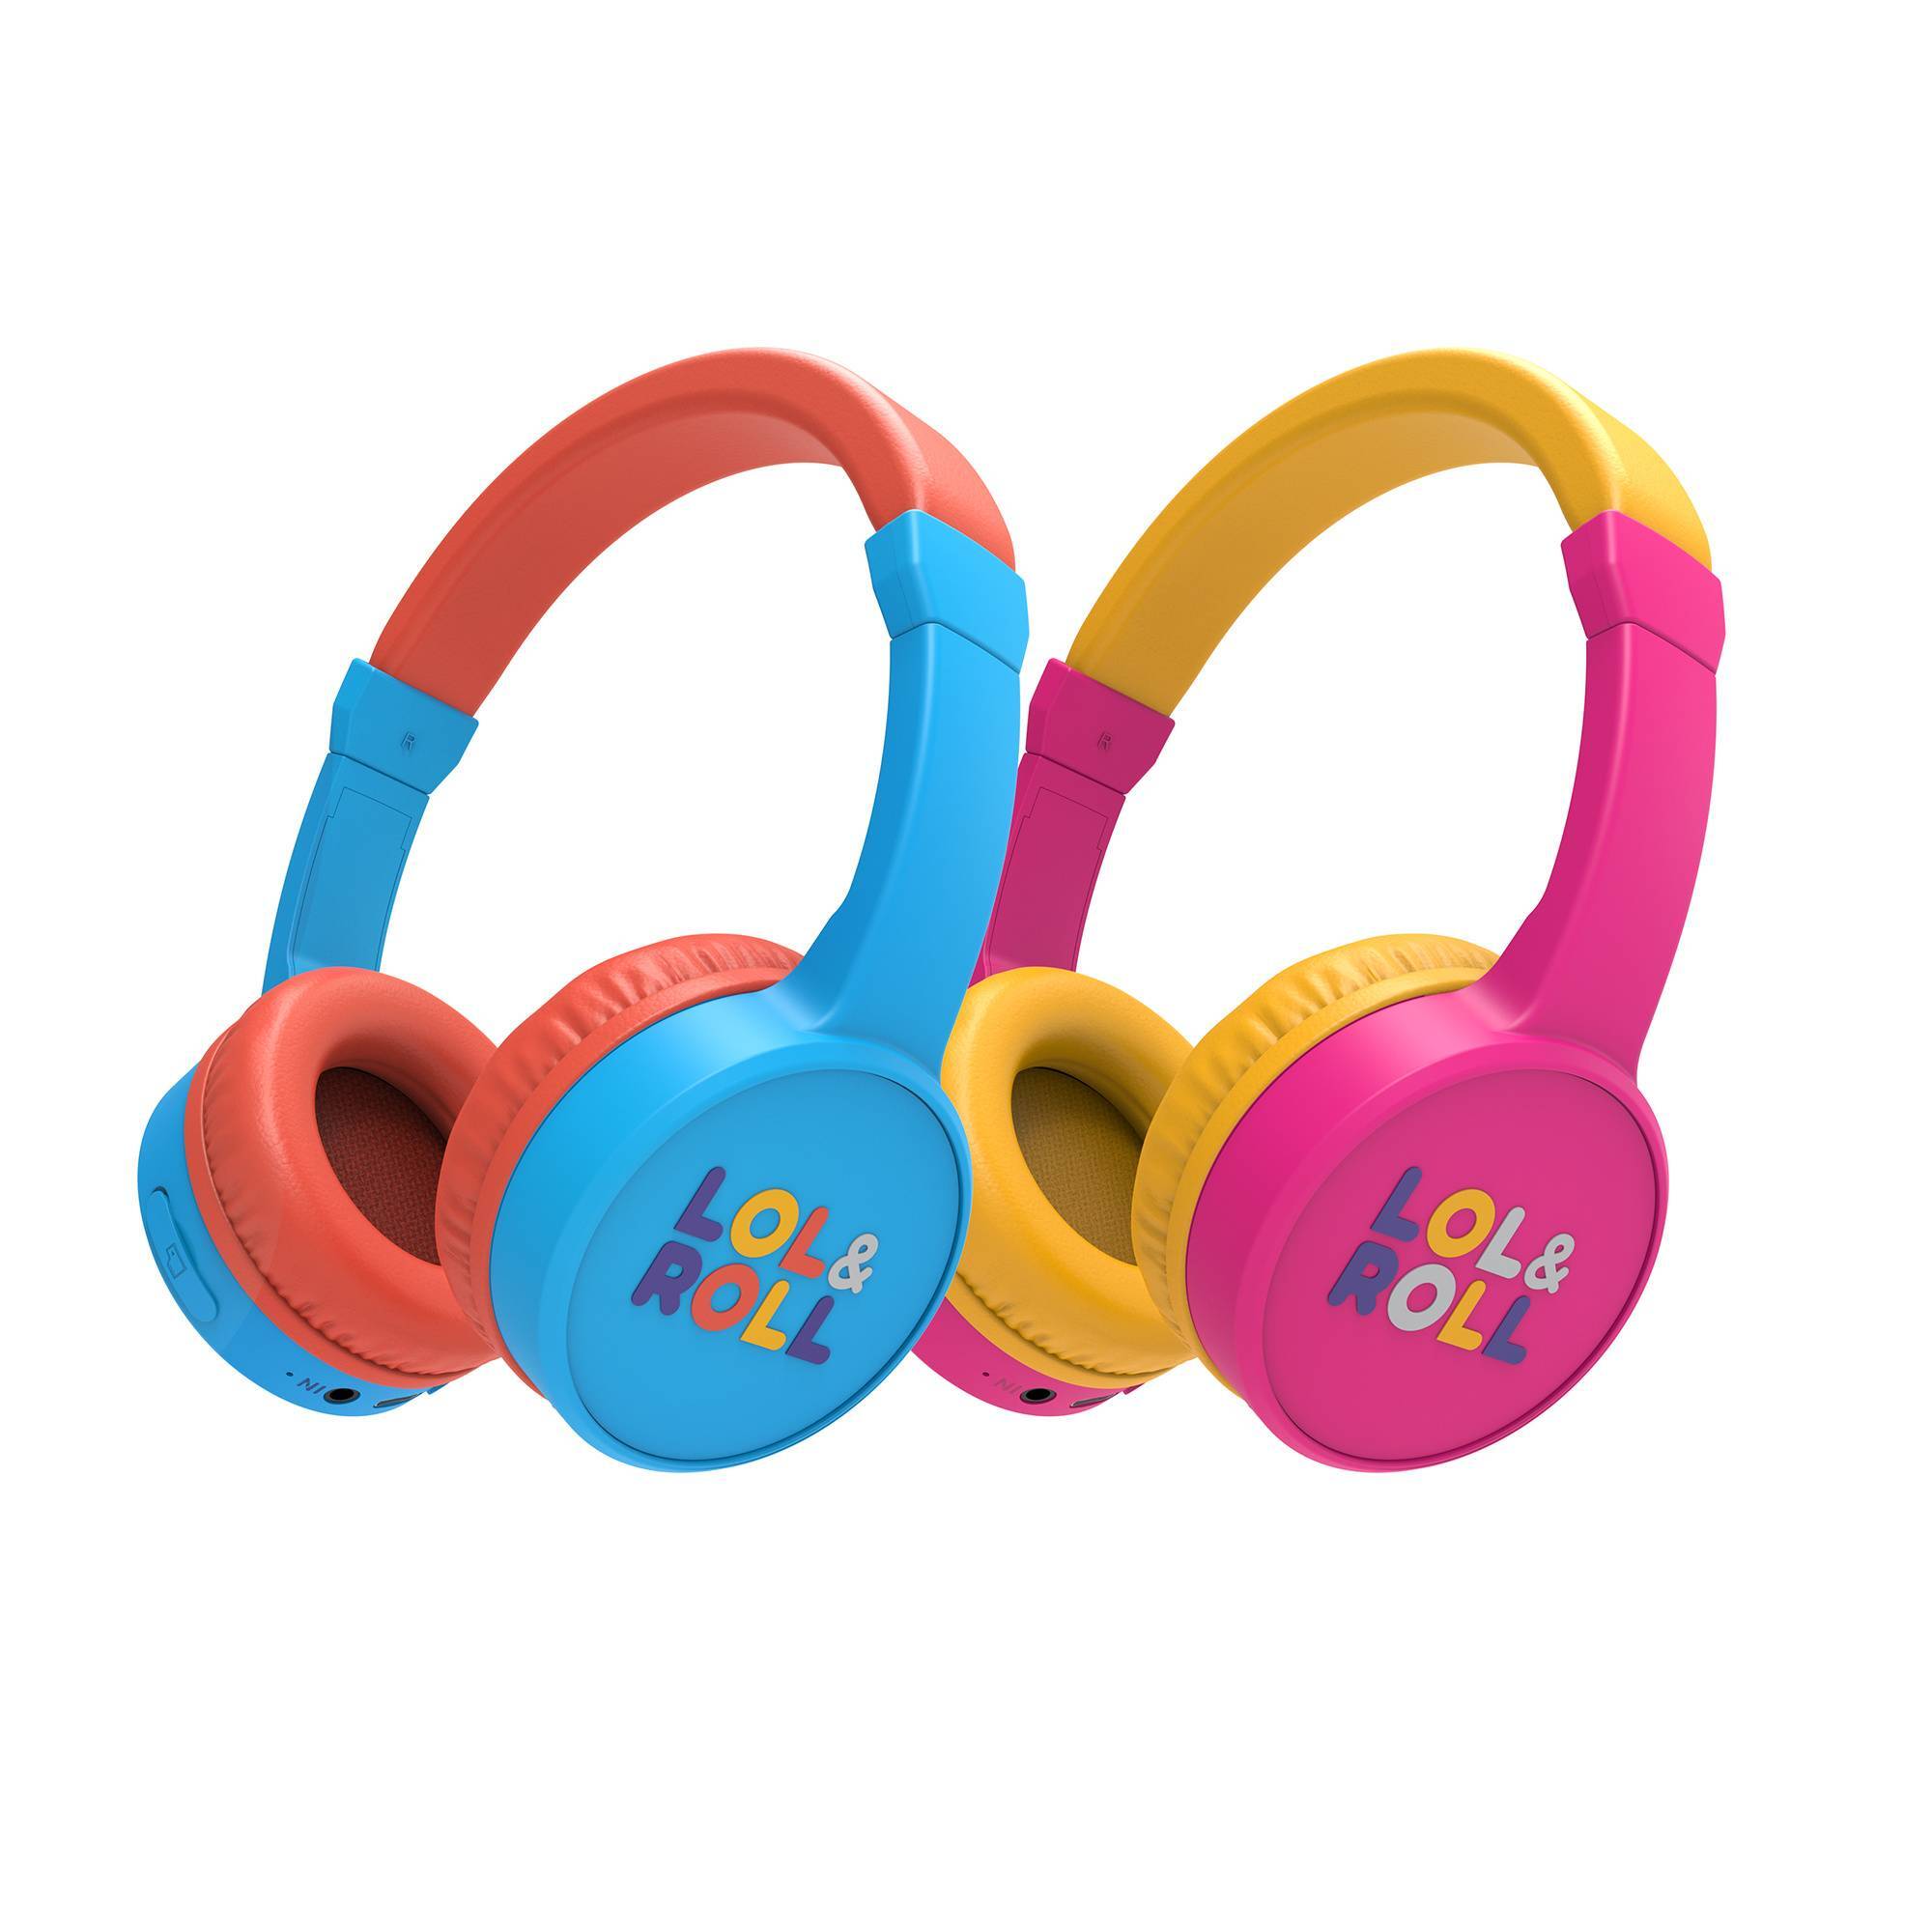 Kids' headphones with 85 dB volume limitation